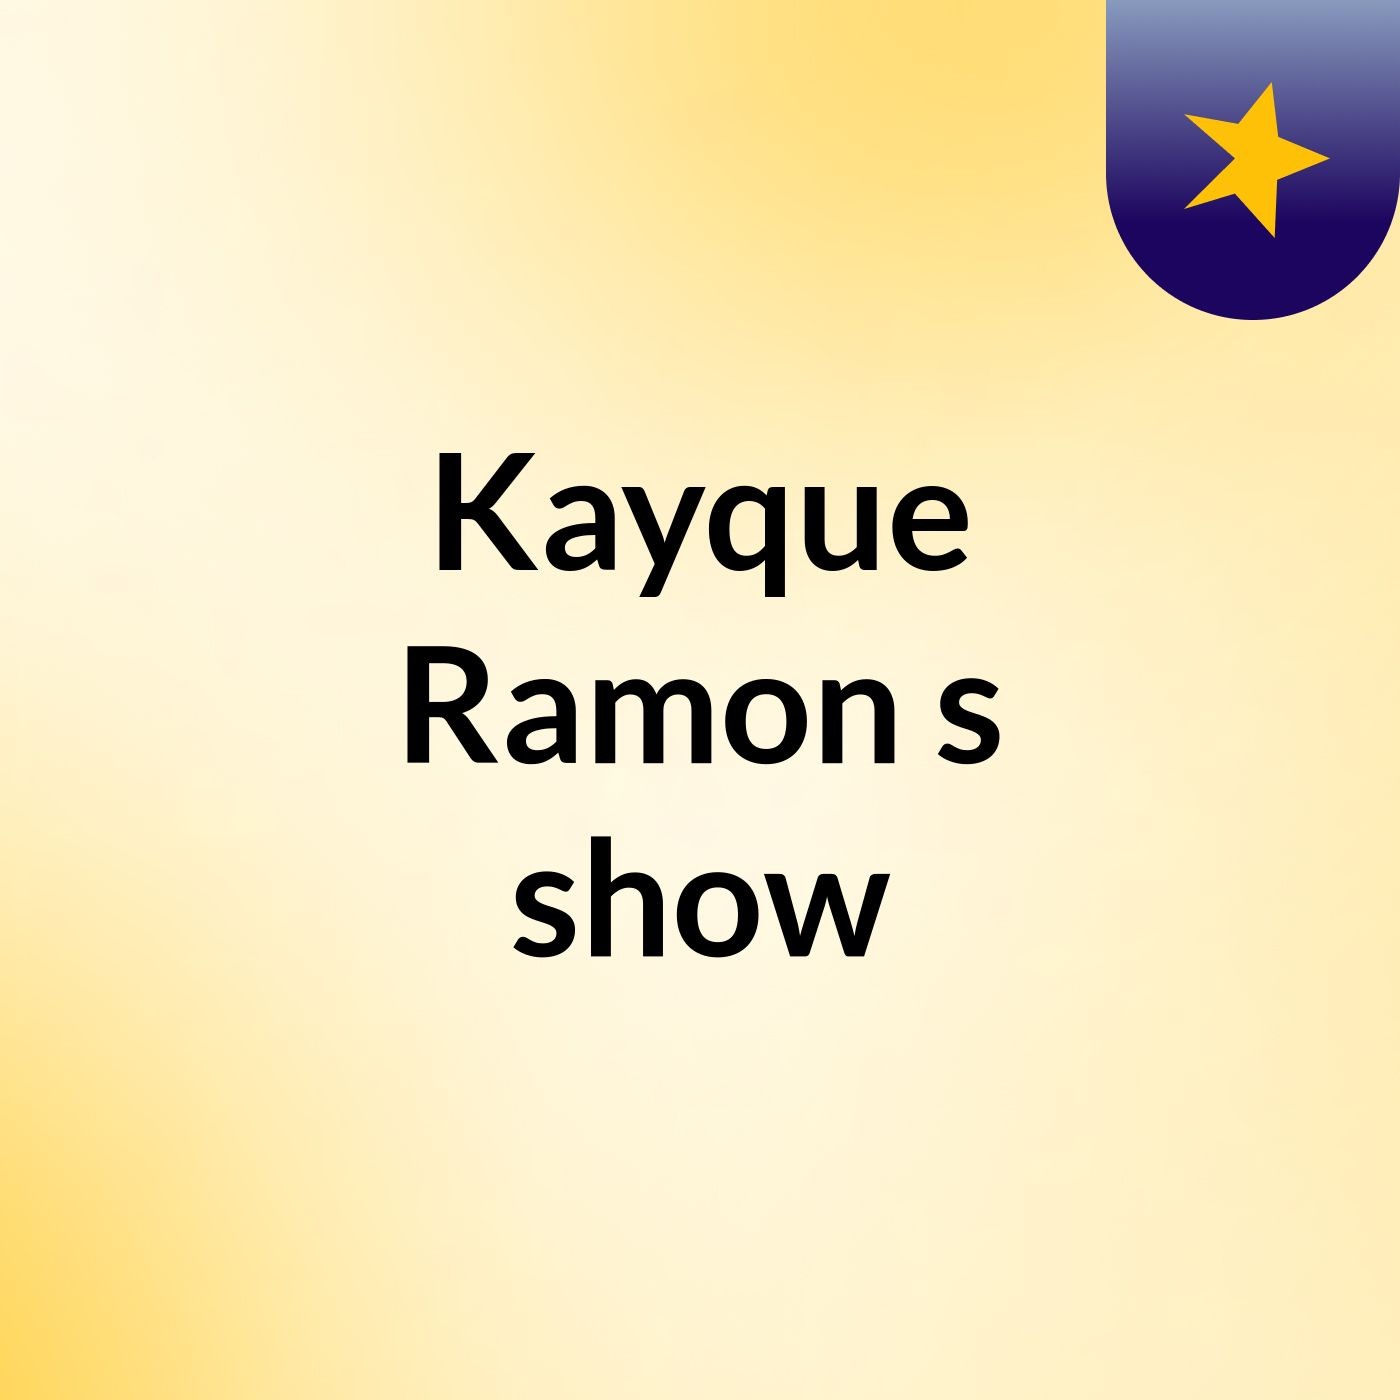 Kayque Ramon's show